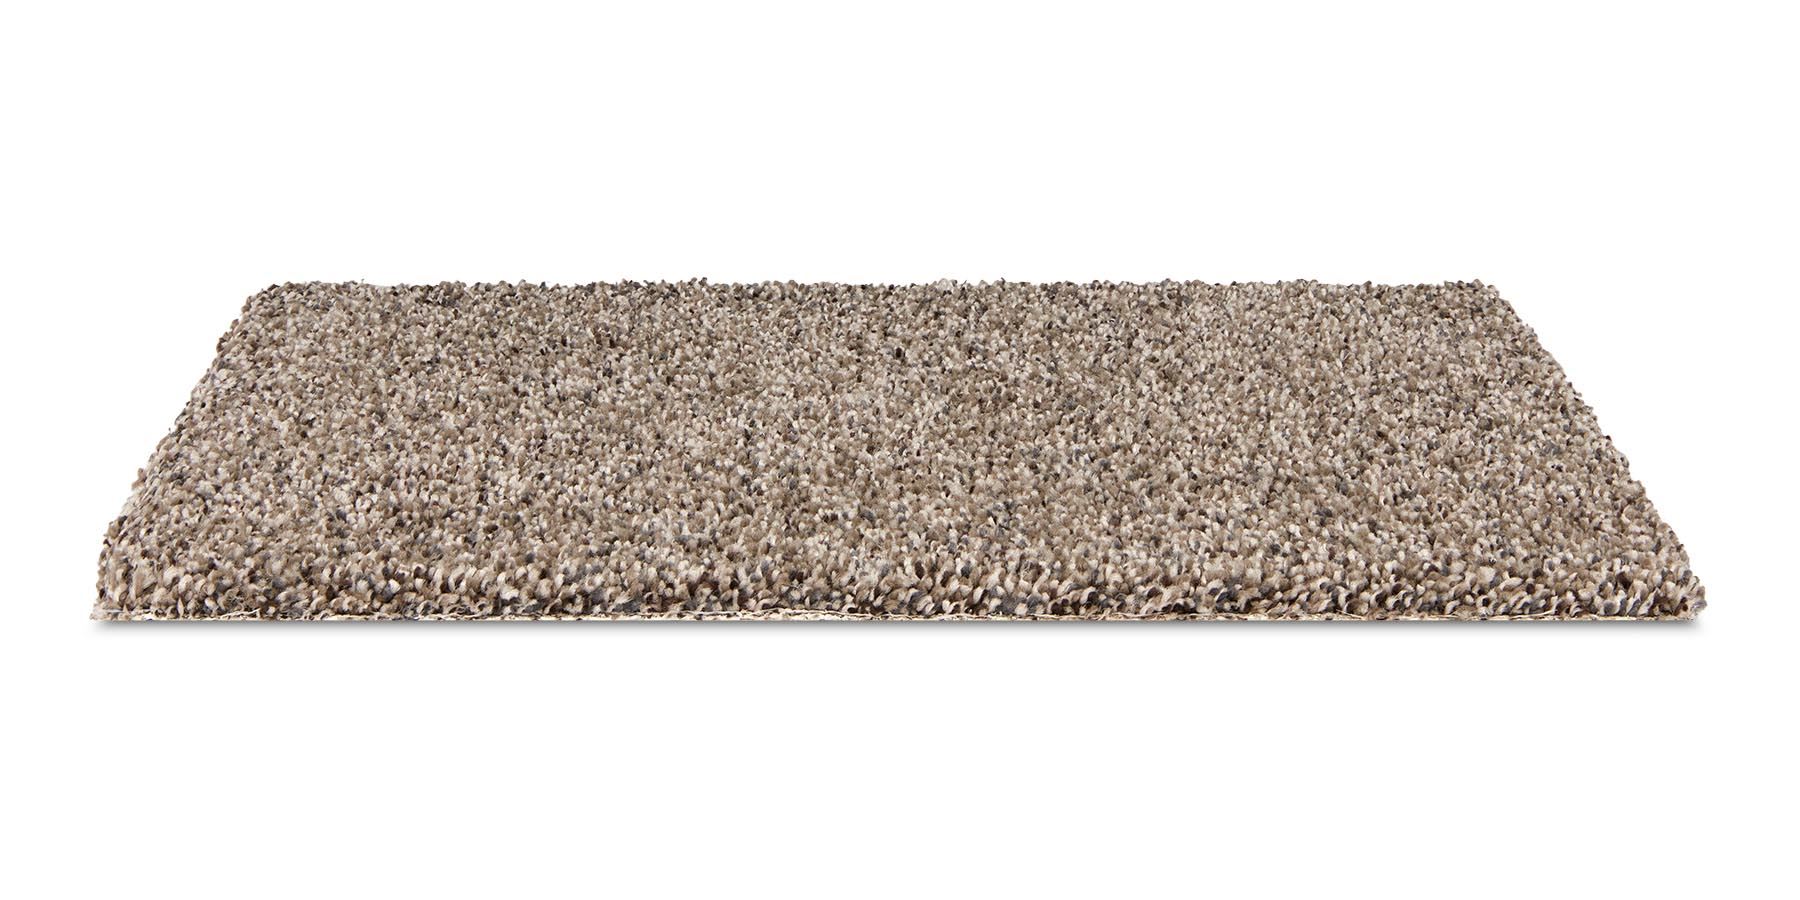 Elliston Plush Carpet